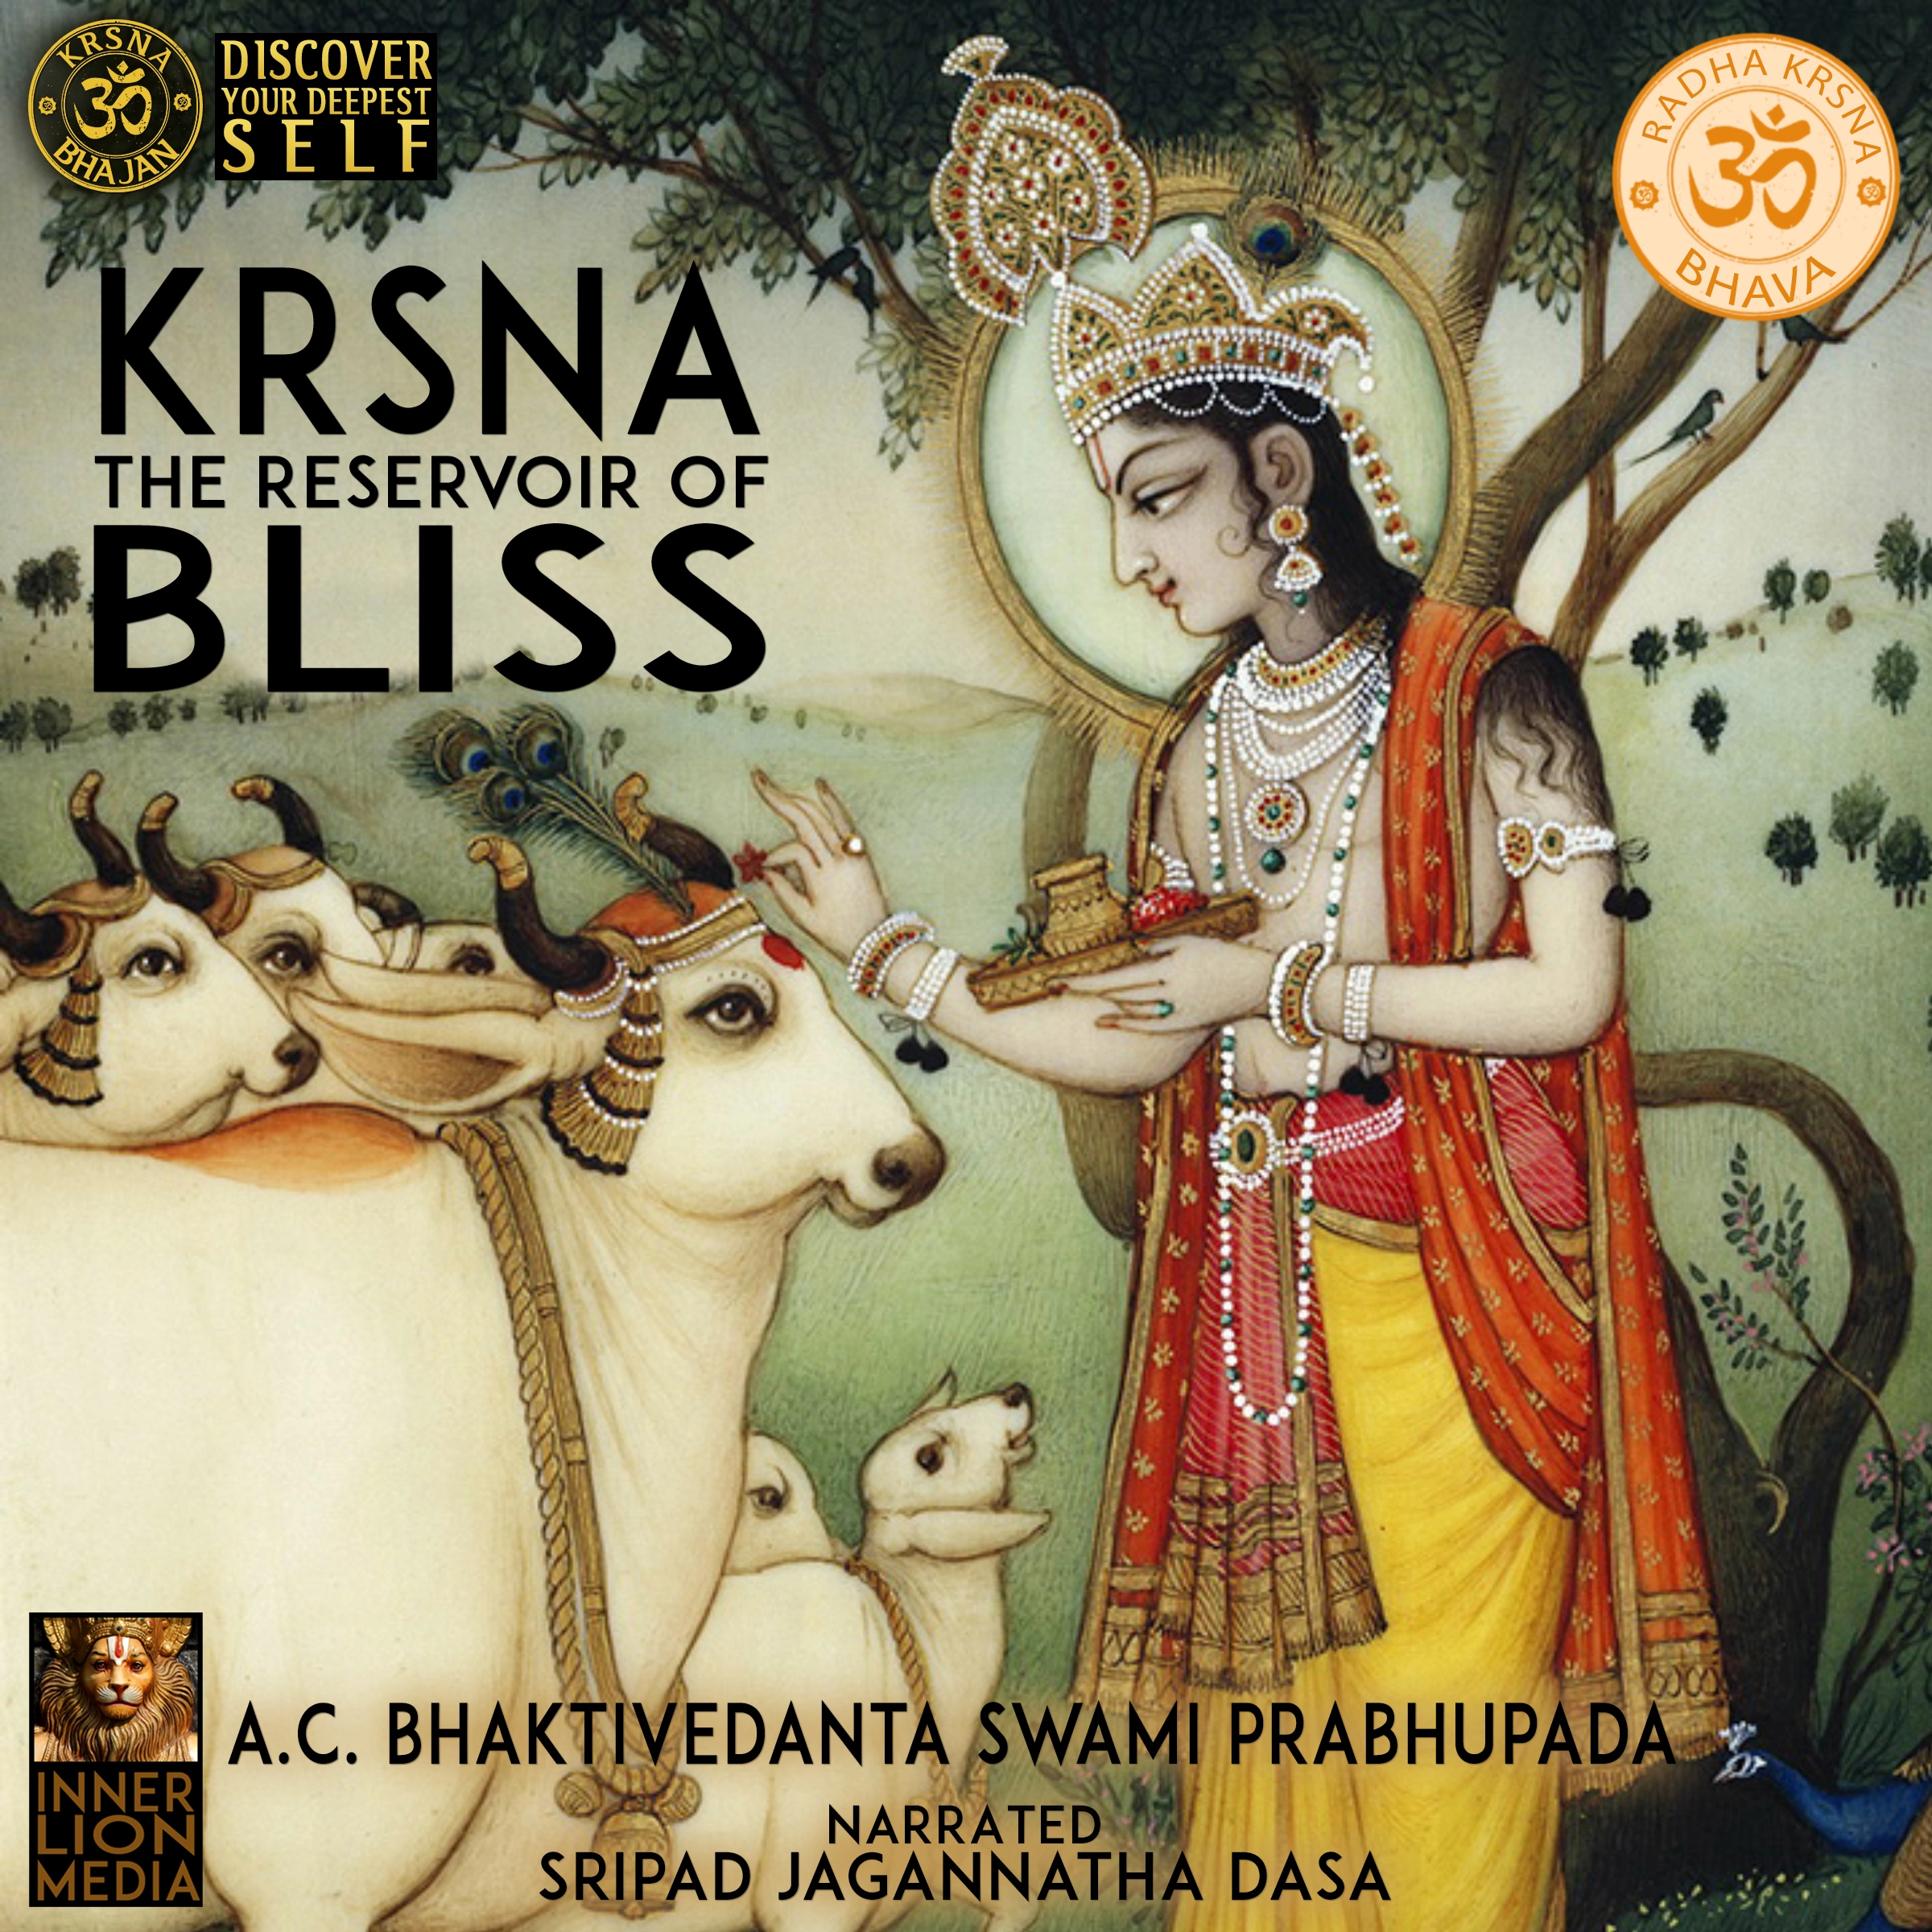 Krsna The Reservoir Of Bliss by A.C. Bhaktivedanta Swami Prabhupada Audiobook